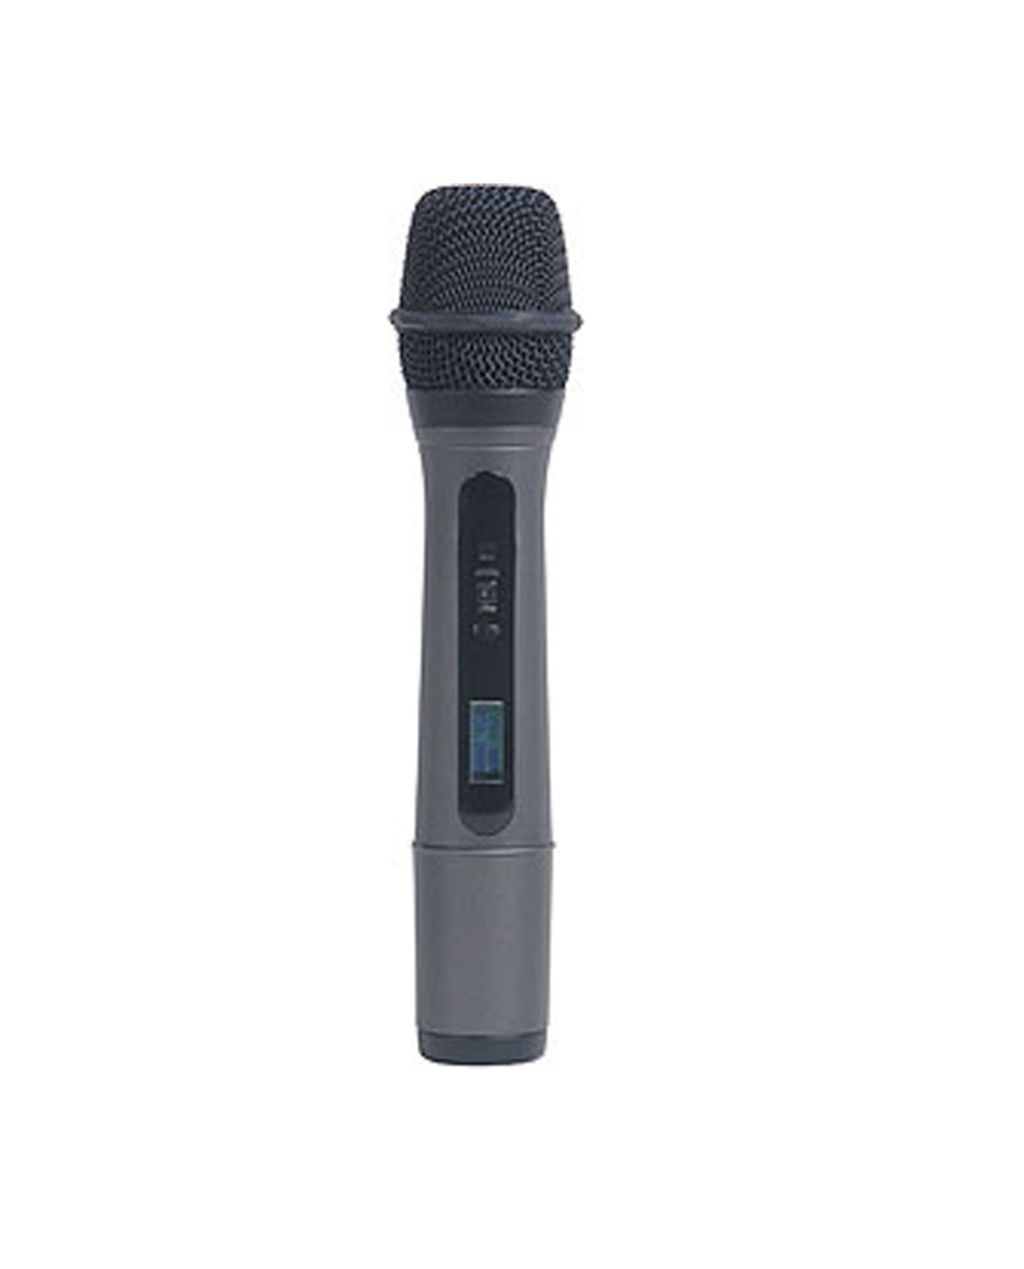 SQ-5016 Handheld Cordless Microphone